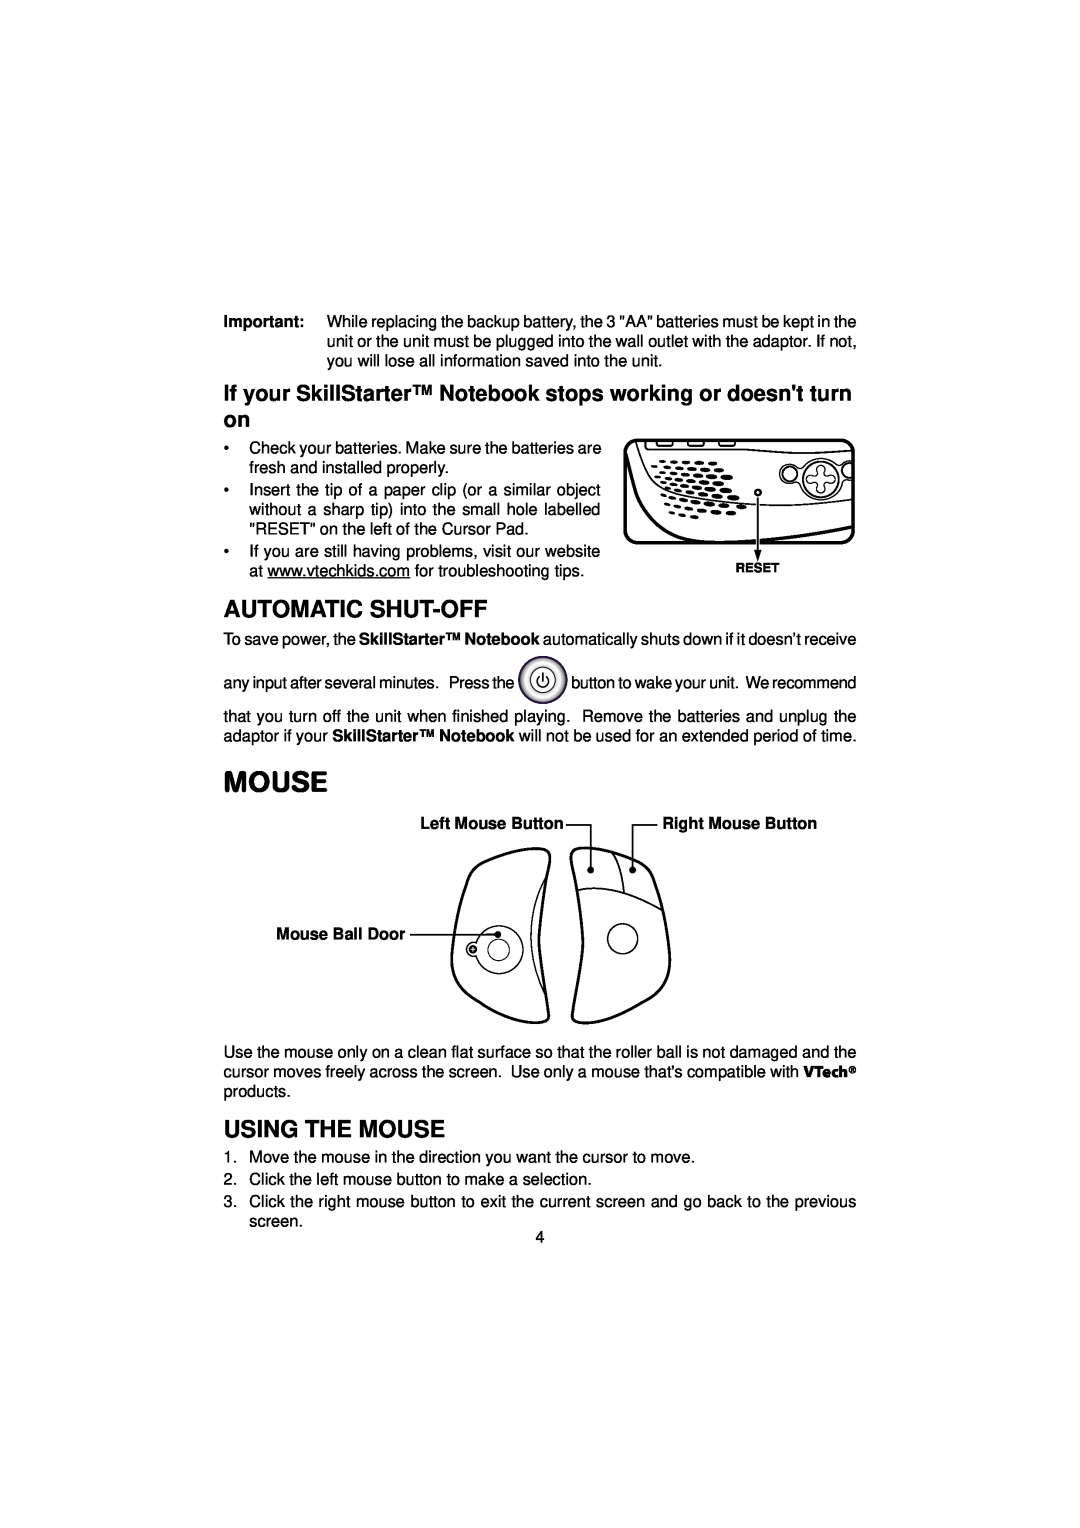 VTech SkillStarter Notebook manual Automatic Shut-Off, Using The Mouse 